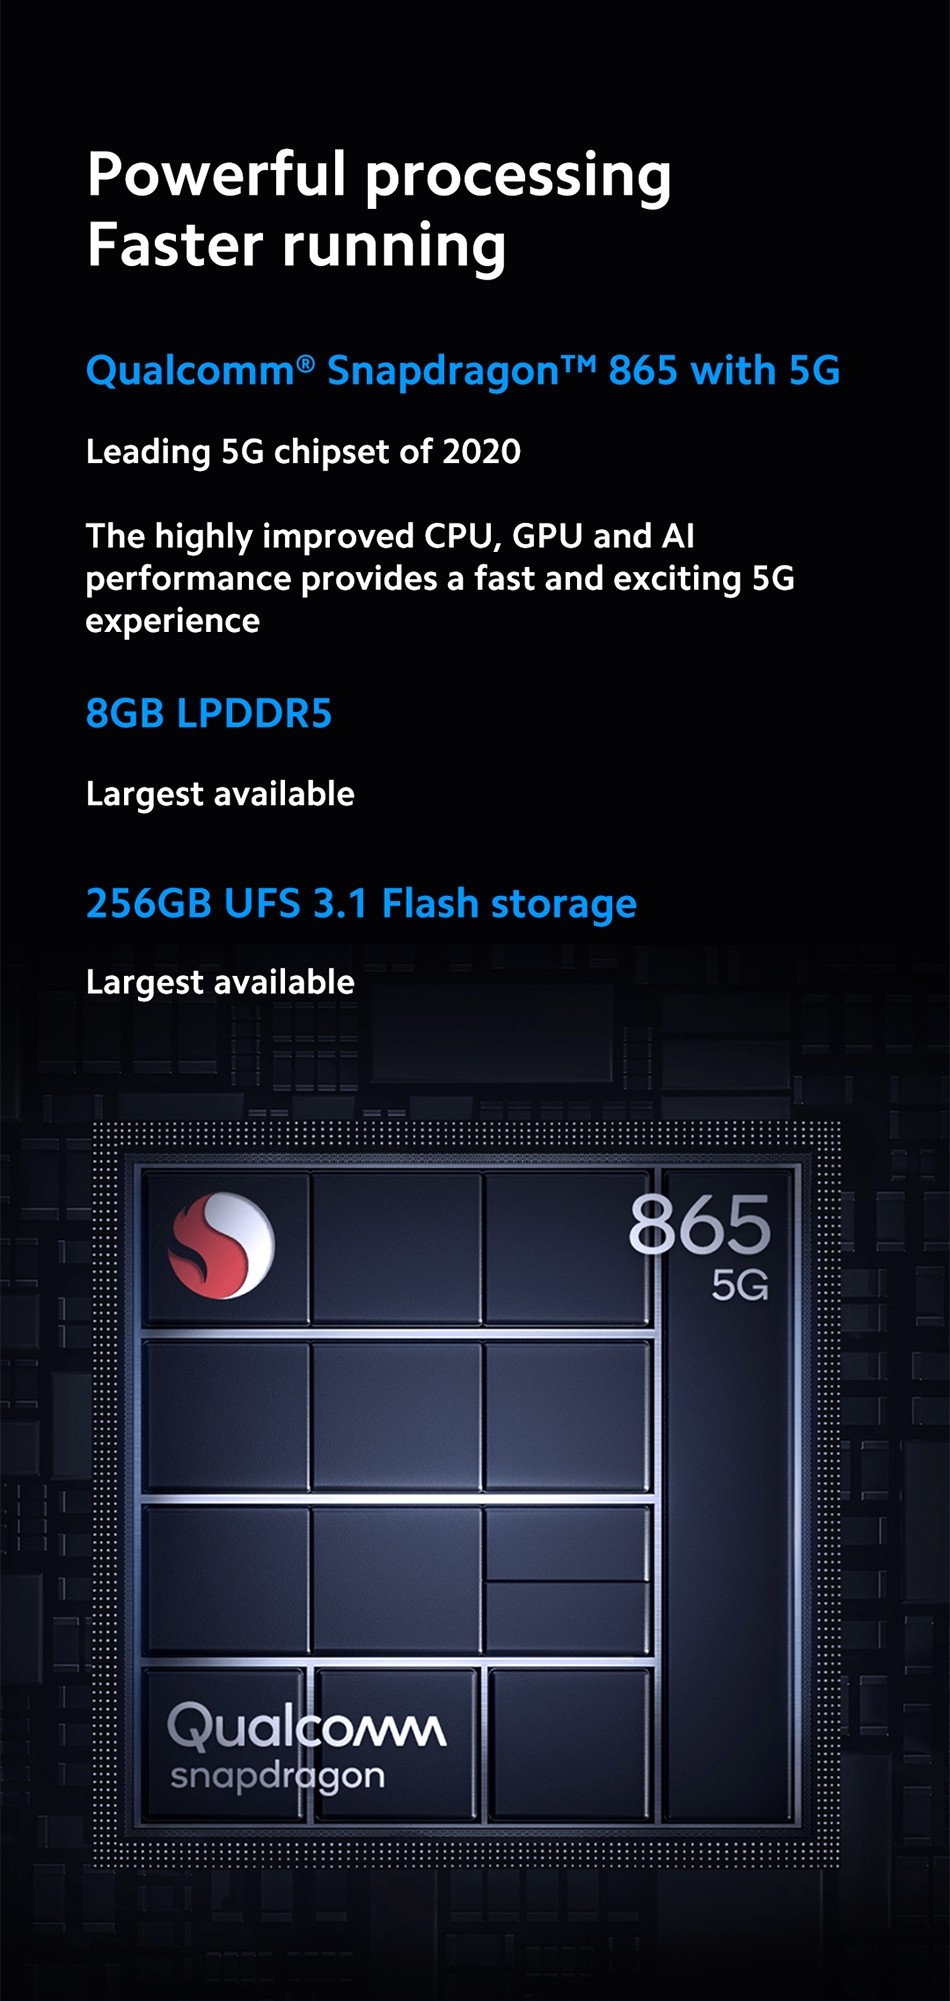 Xiaomi Mi 10T Snapdragon 865 6 GB + 128 GB 6,67 polegadas FHD + DotDisplay 64MP AI câmera smartphone